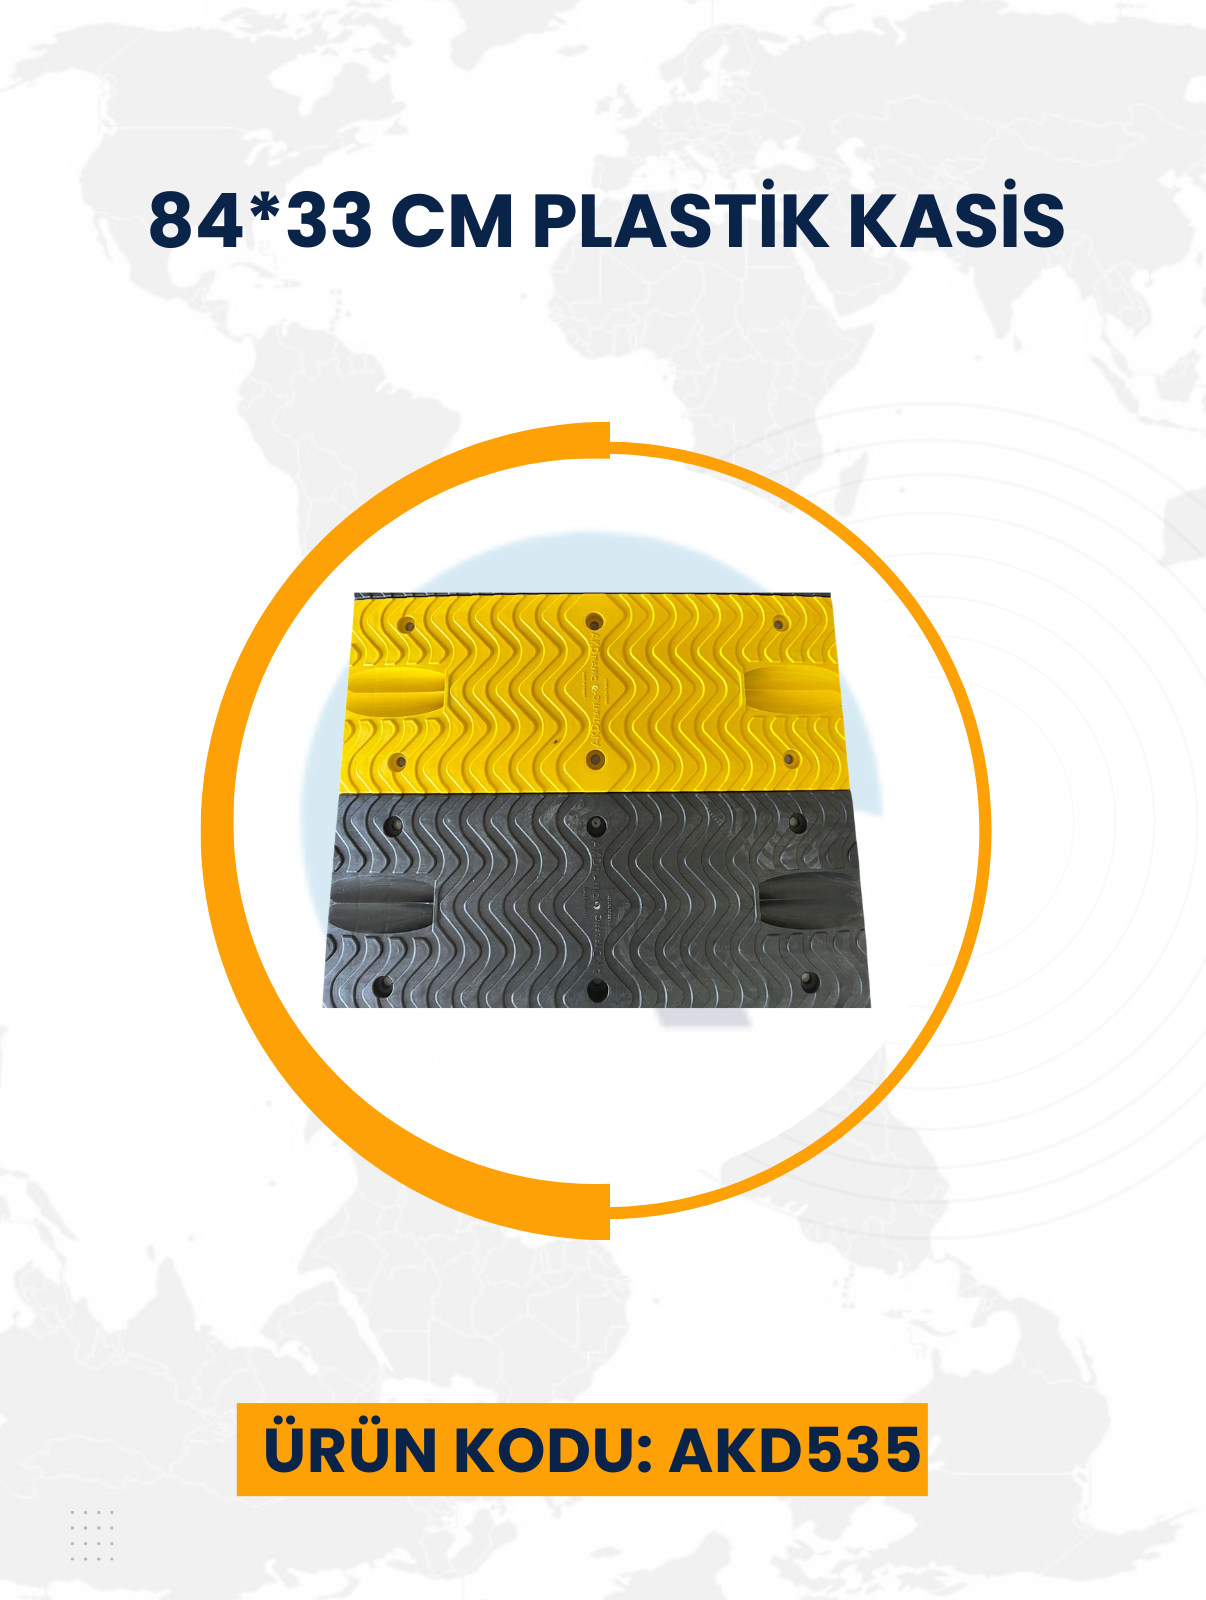 84*33 Cm Plastik Kasis